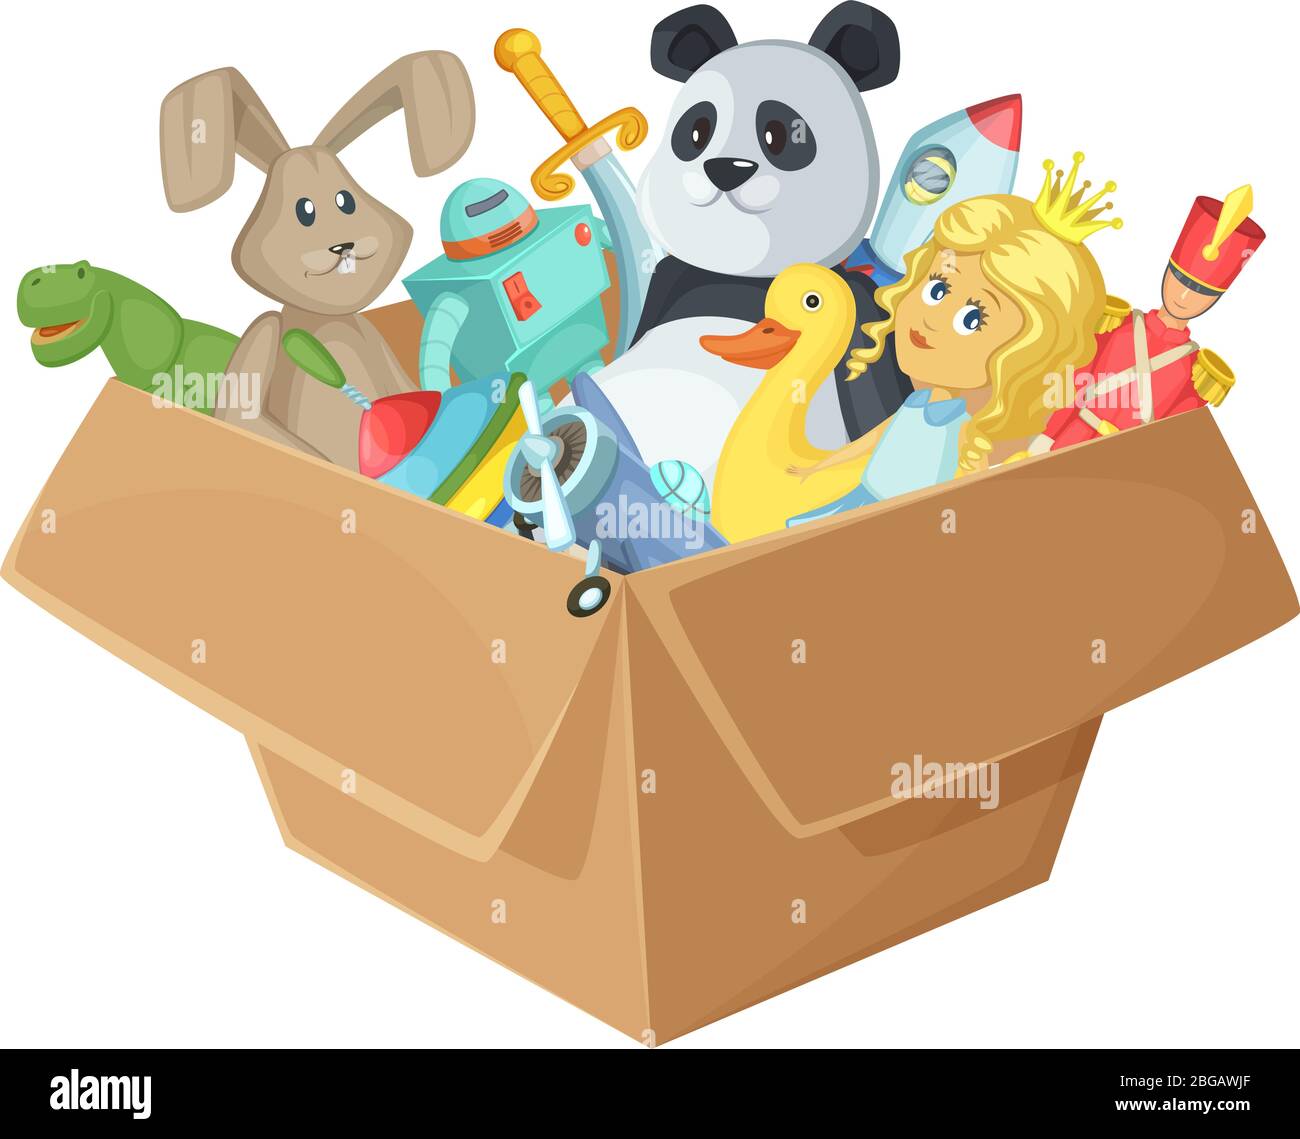 Children toys in cardboard box. Funny vector illustration isolate on white background Stock Vector